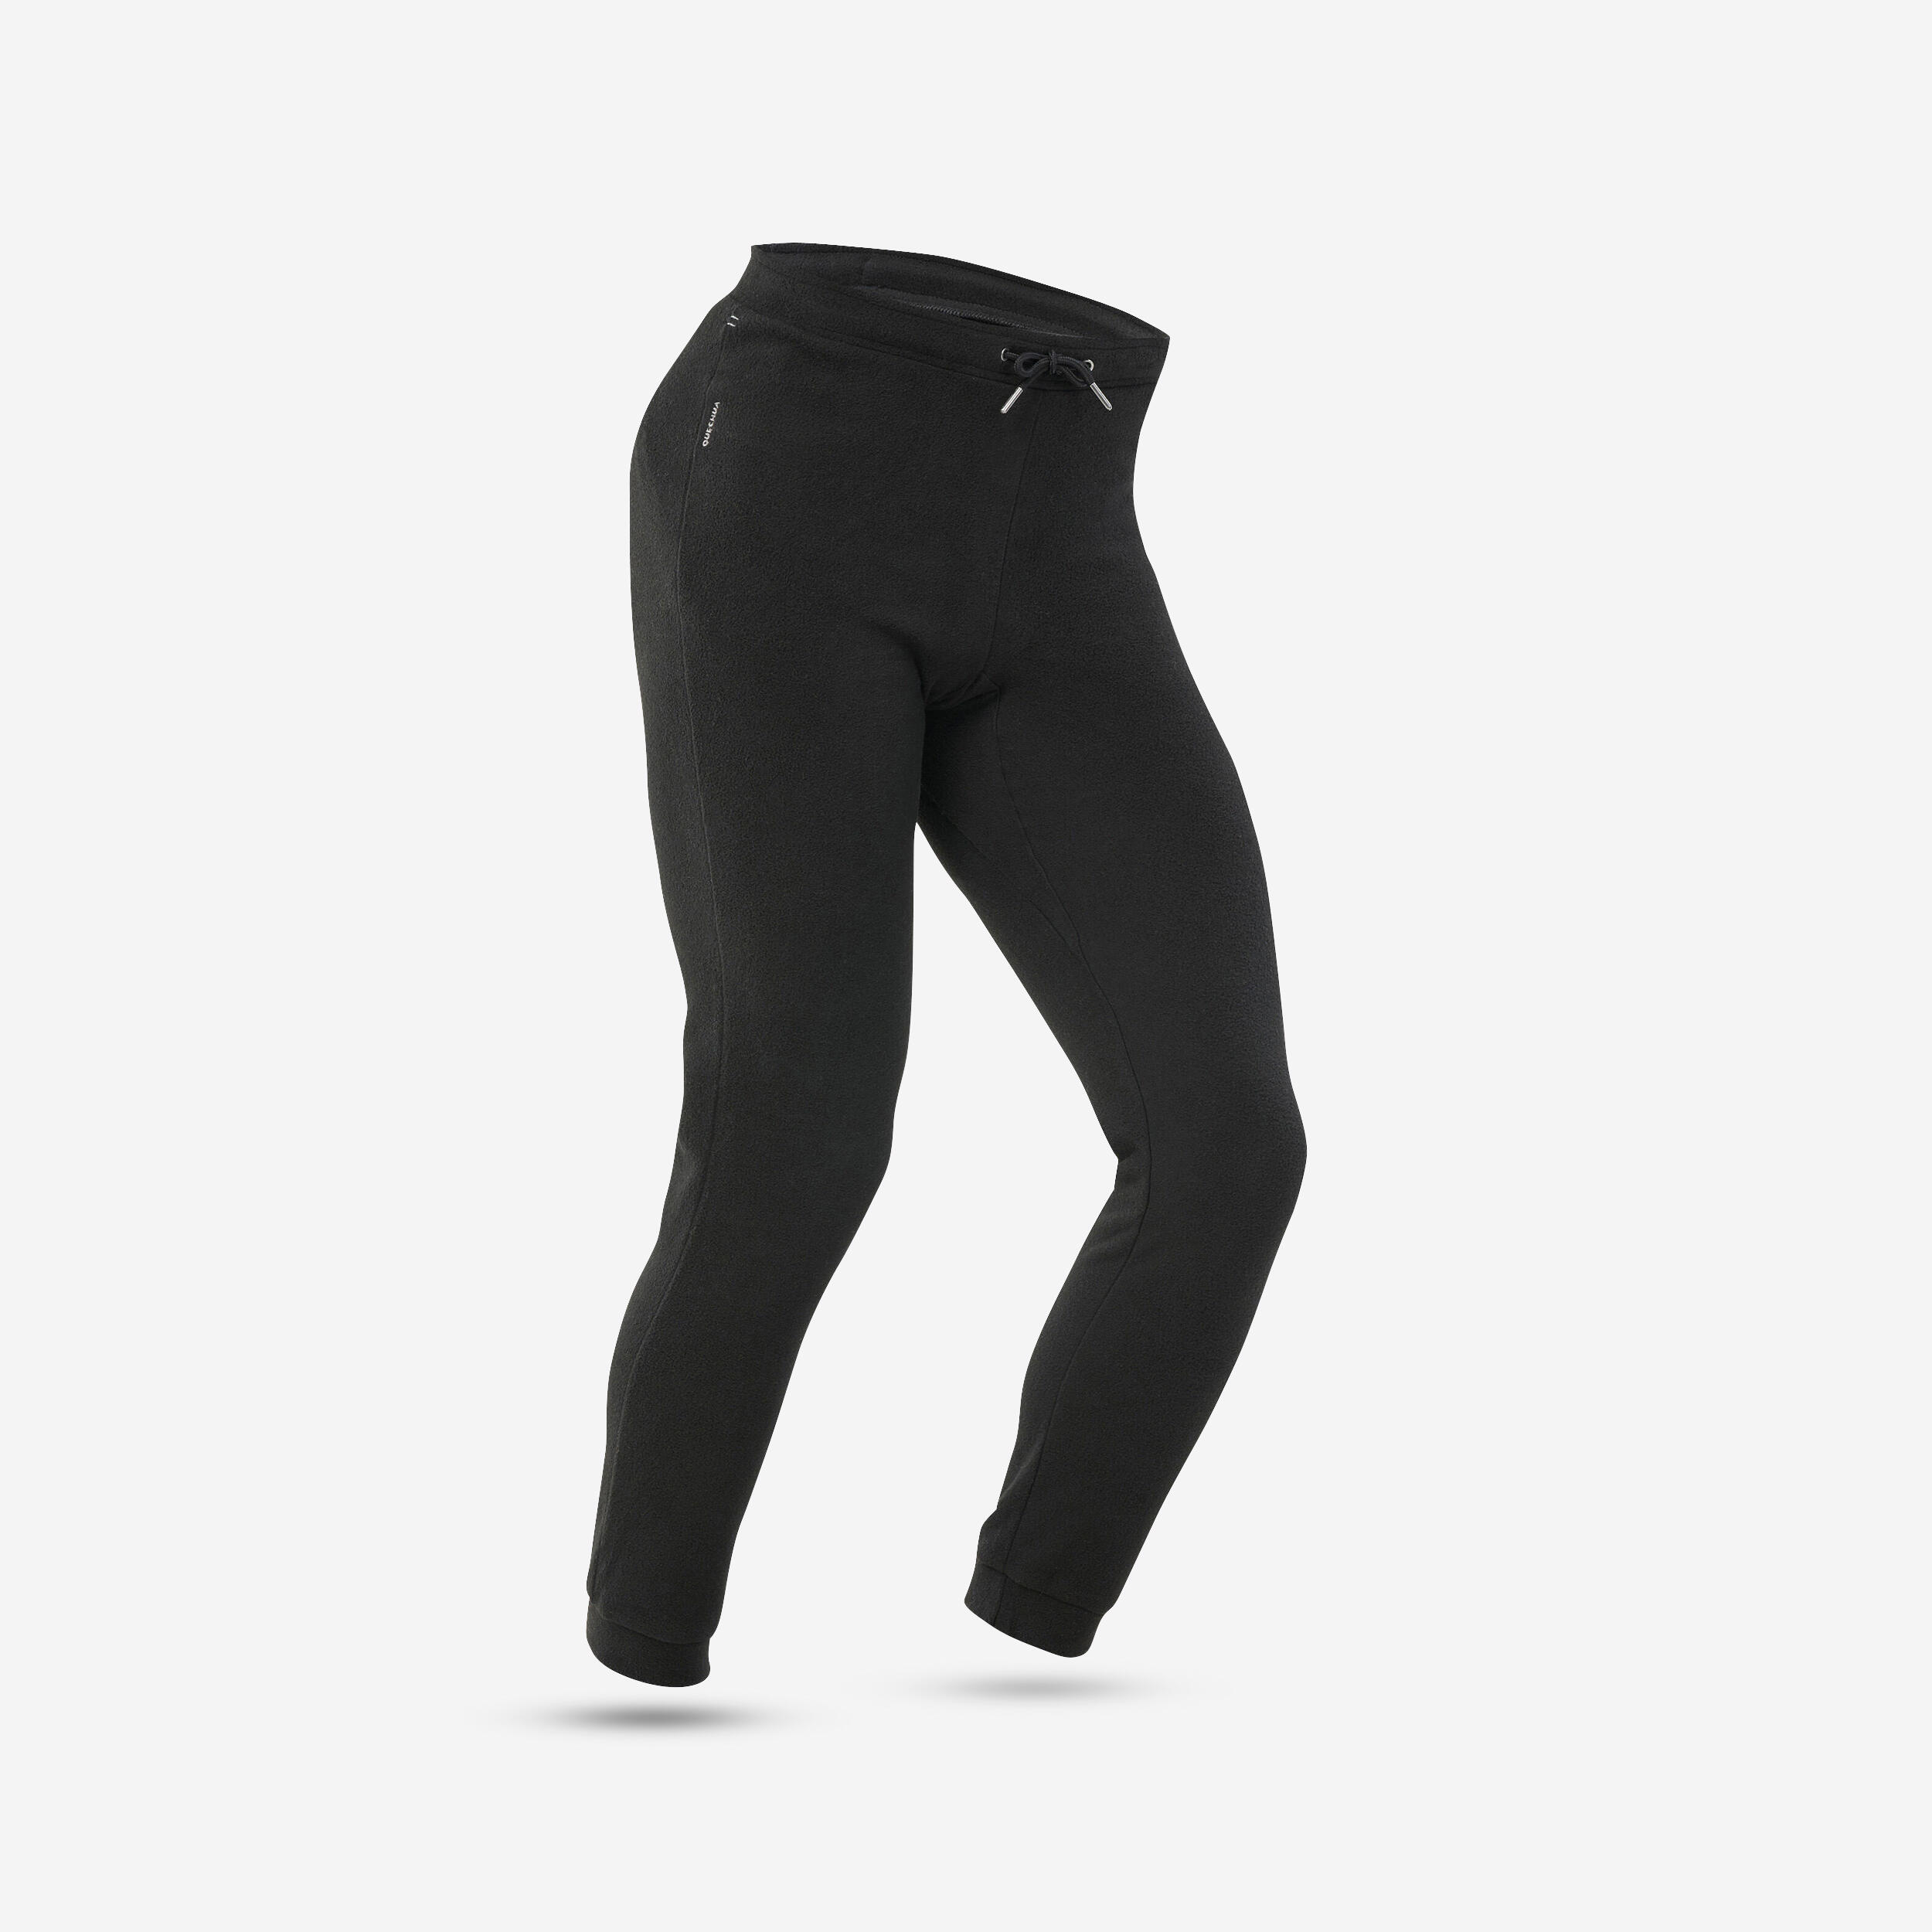 Decathlon cycling tights | Cycling tights, Tights shop, Clothes design